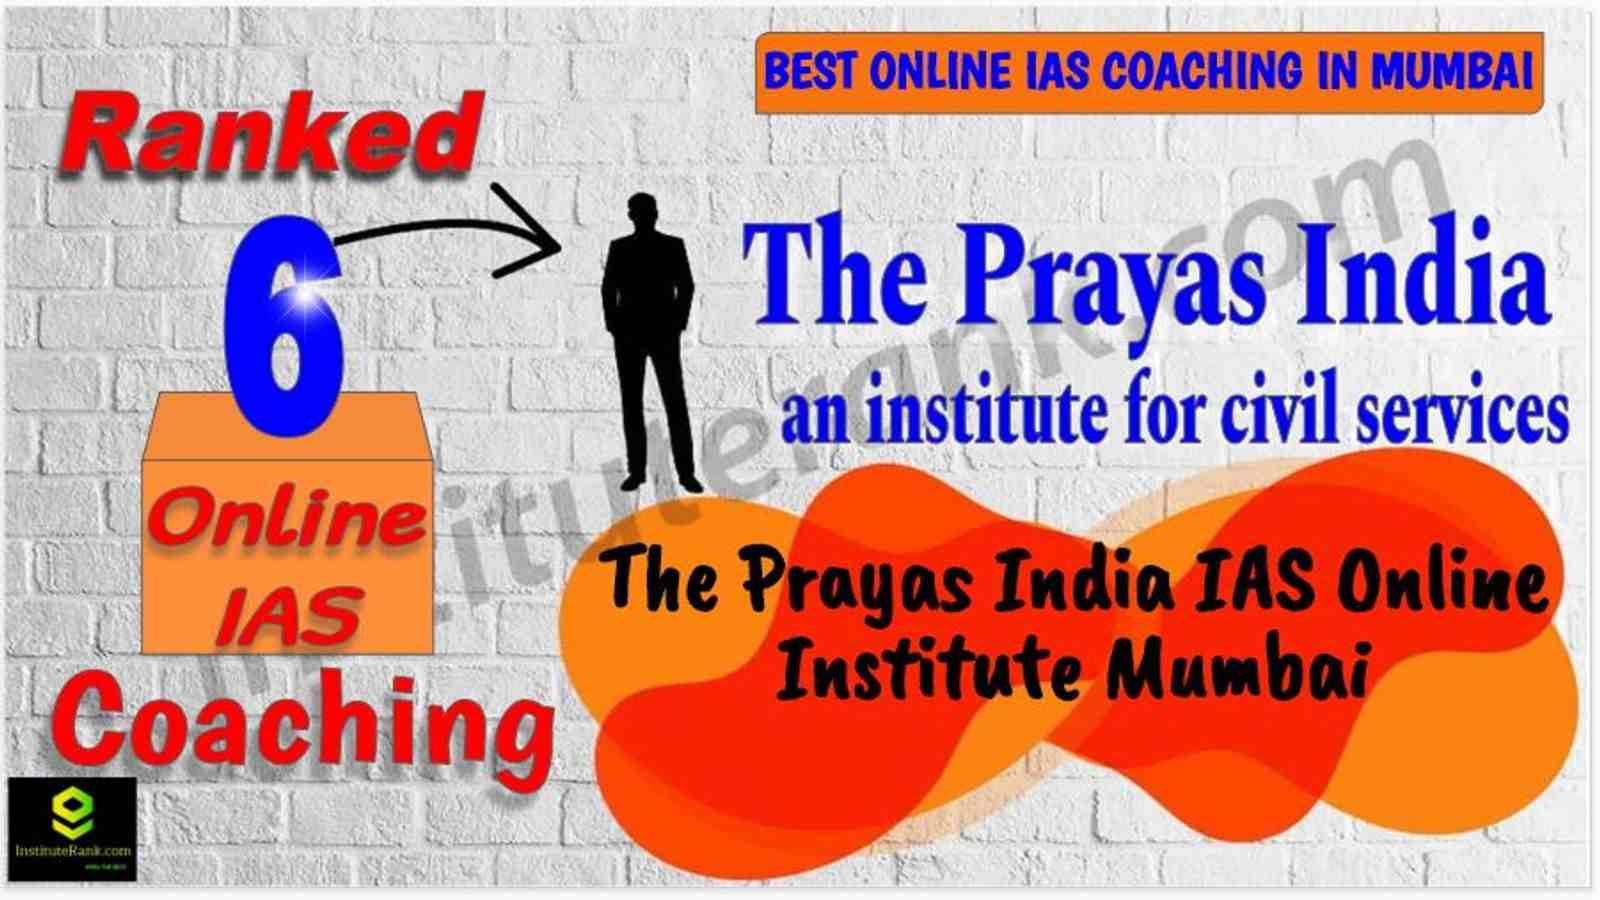 Top Online IAS Coaching in Mumbai